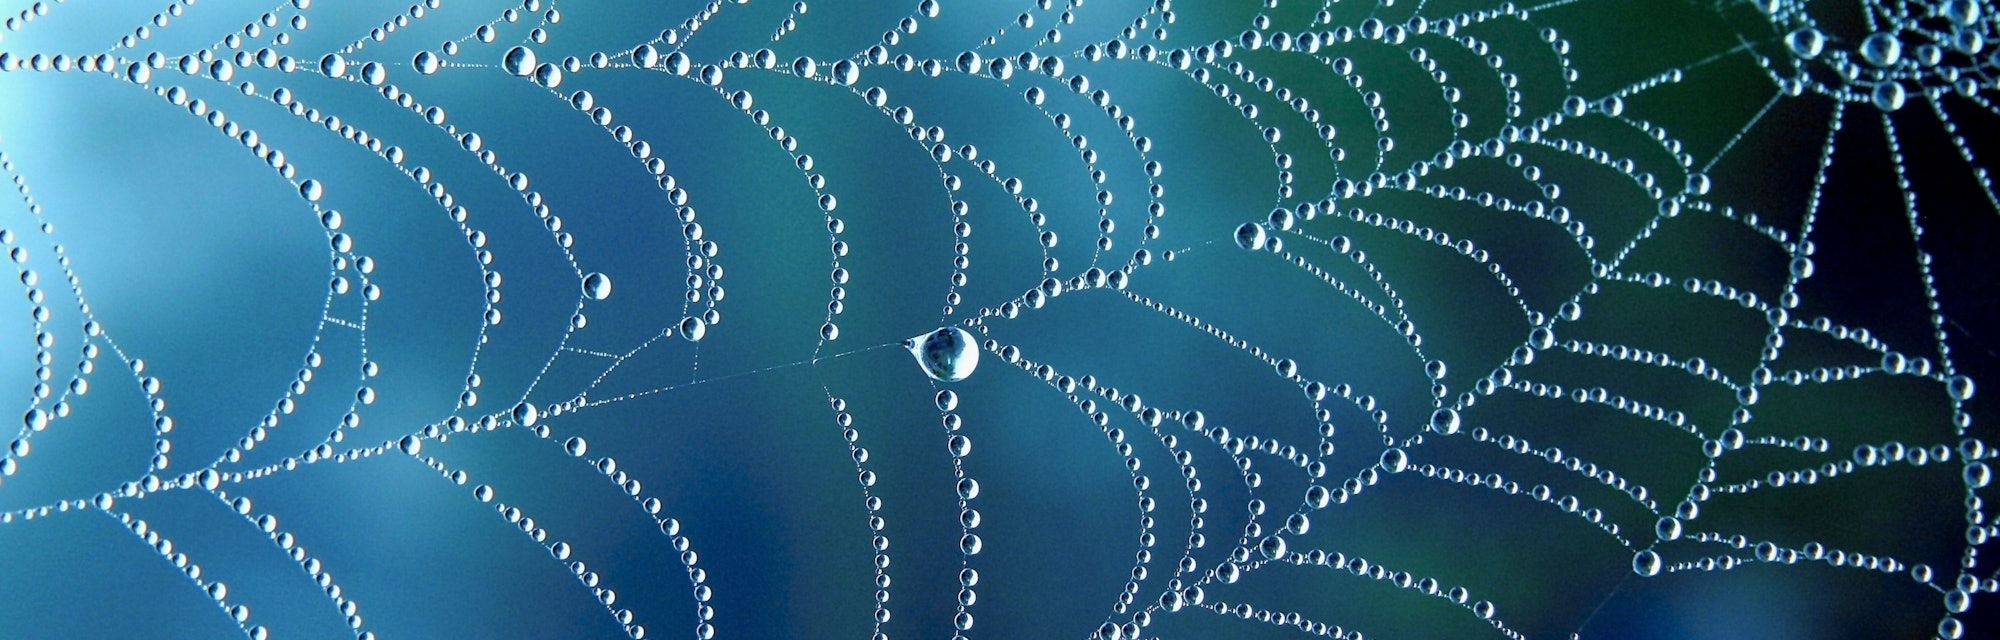 Cobweb or spiderweb natural rain pattern background close-up. Cobweb with drops of rain pattern in b...